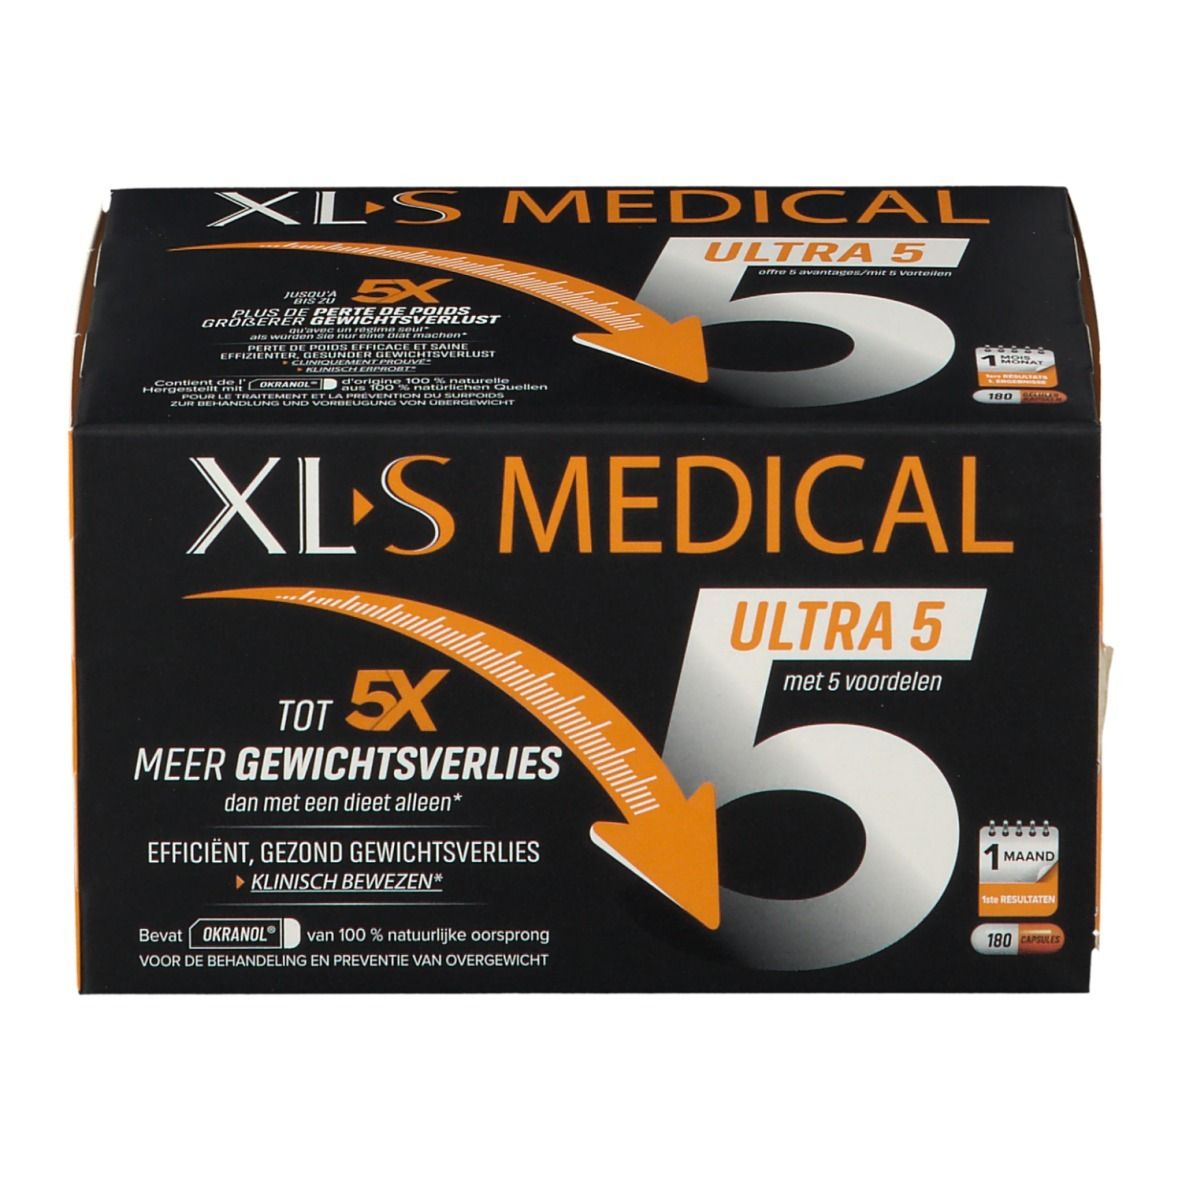 XL-S MEDICAL ULTRA 5